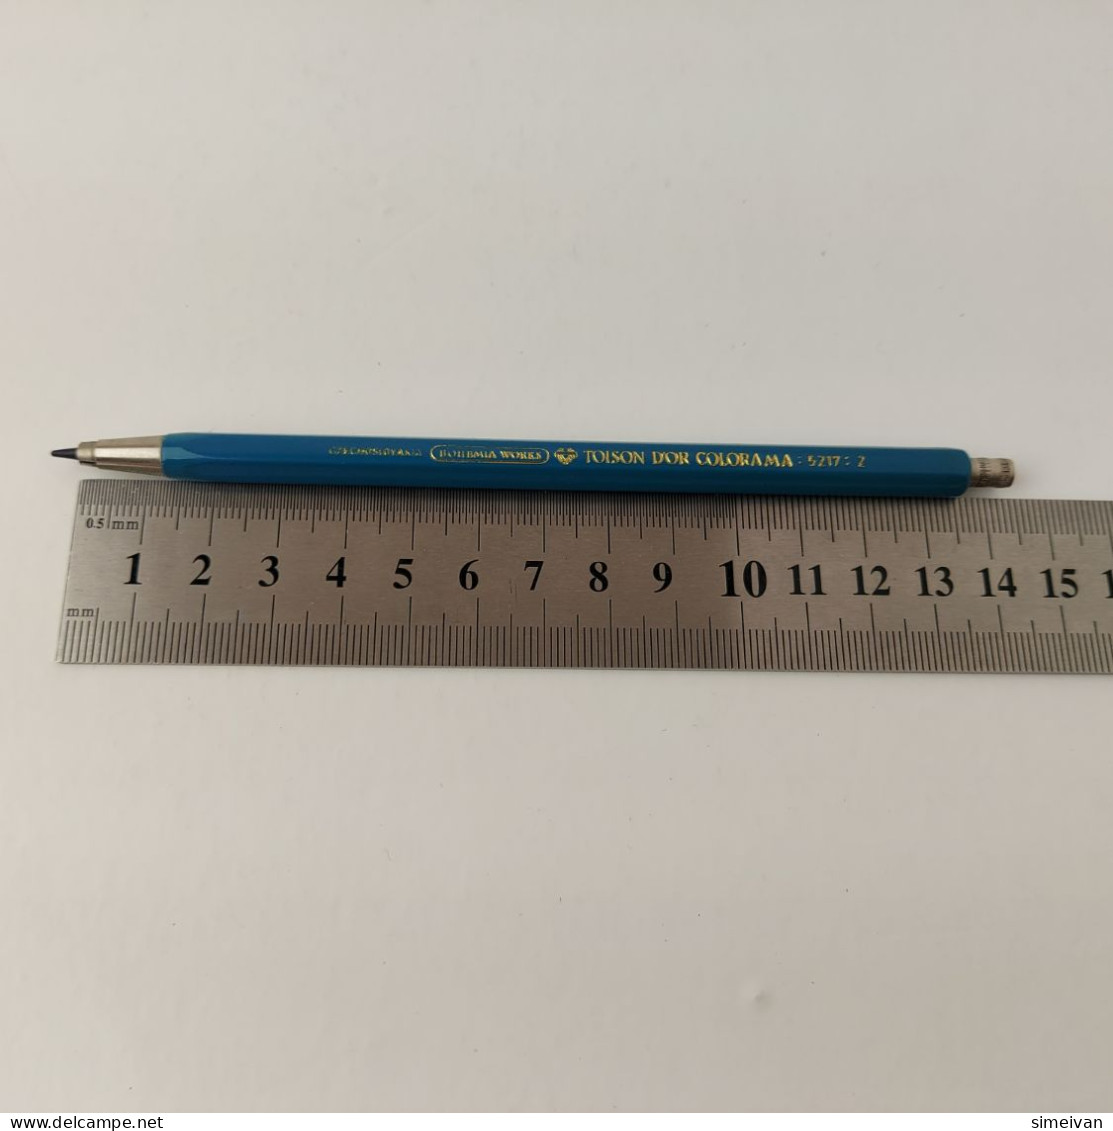 Vintage Mechanical Pencil TOISON D'OR COLORAMA 5217:2 Bohemia Works Blue #5490